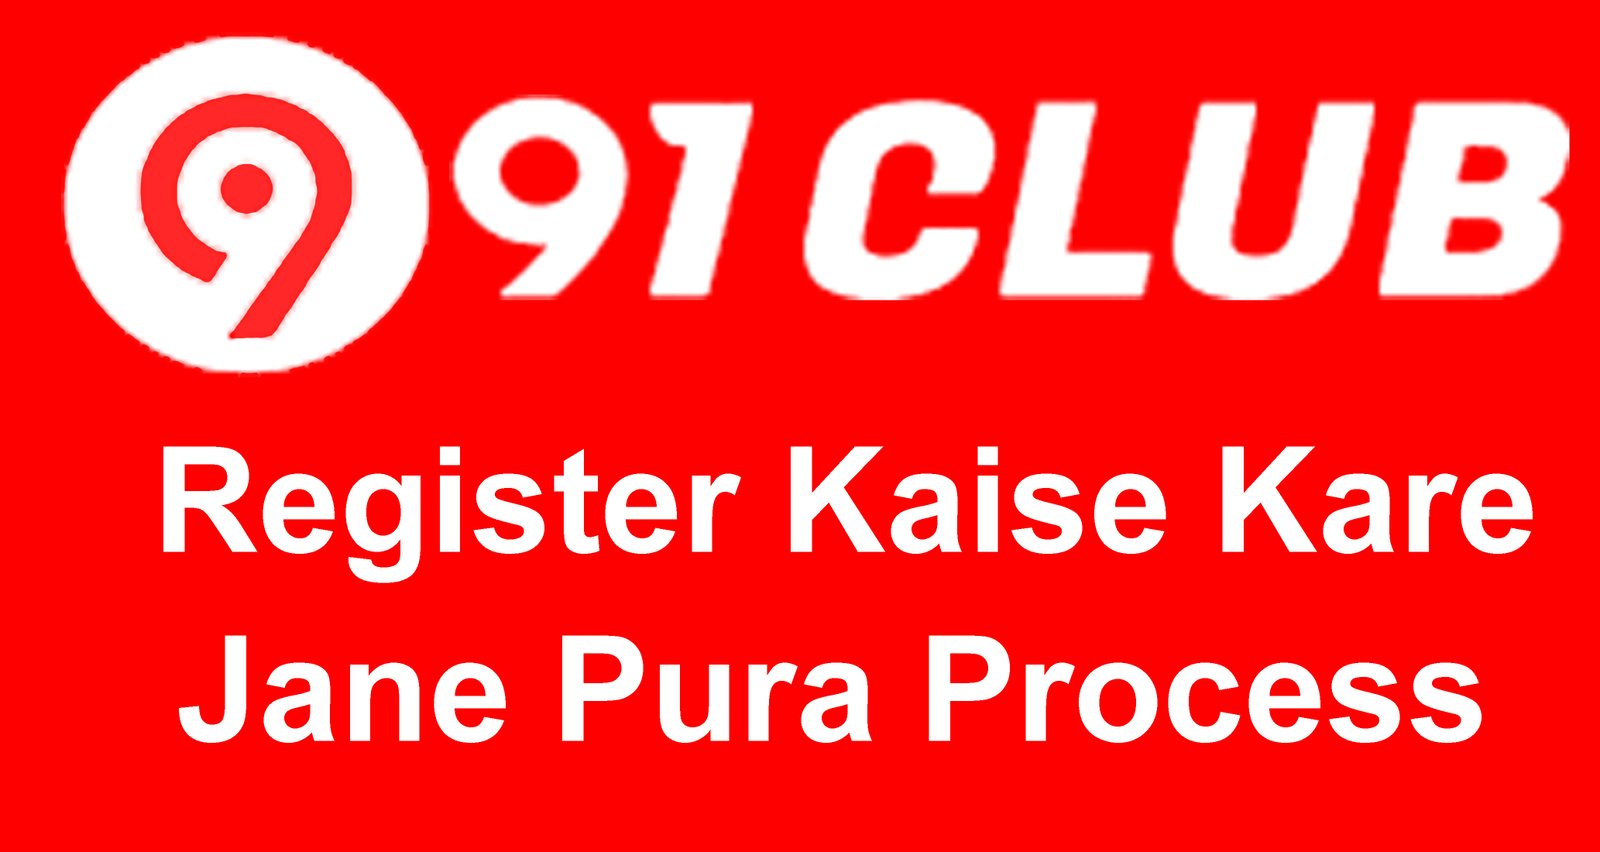 91 Club me Register Kaise Kare - 91 Club Game